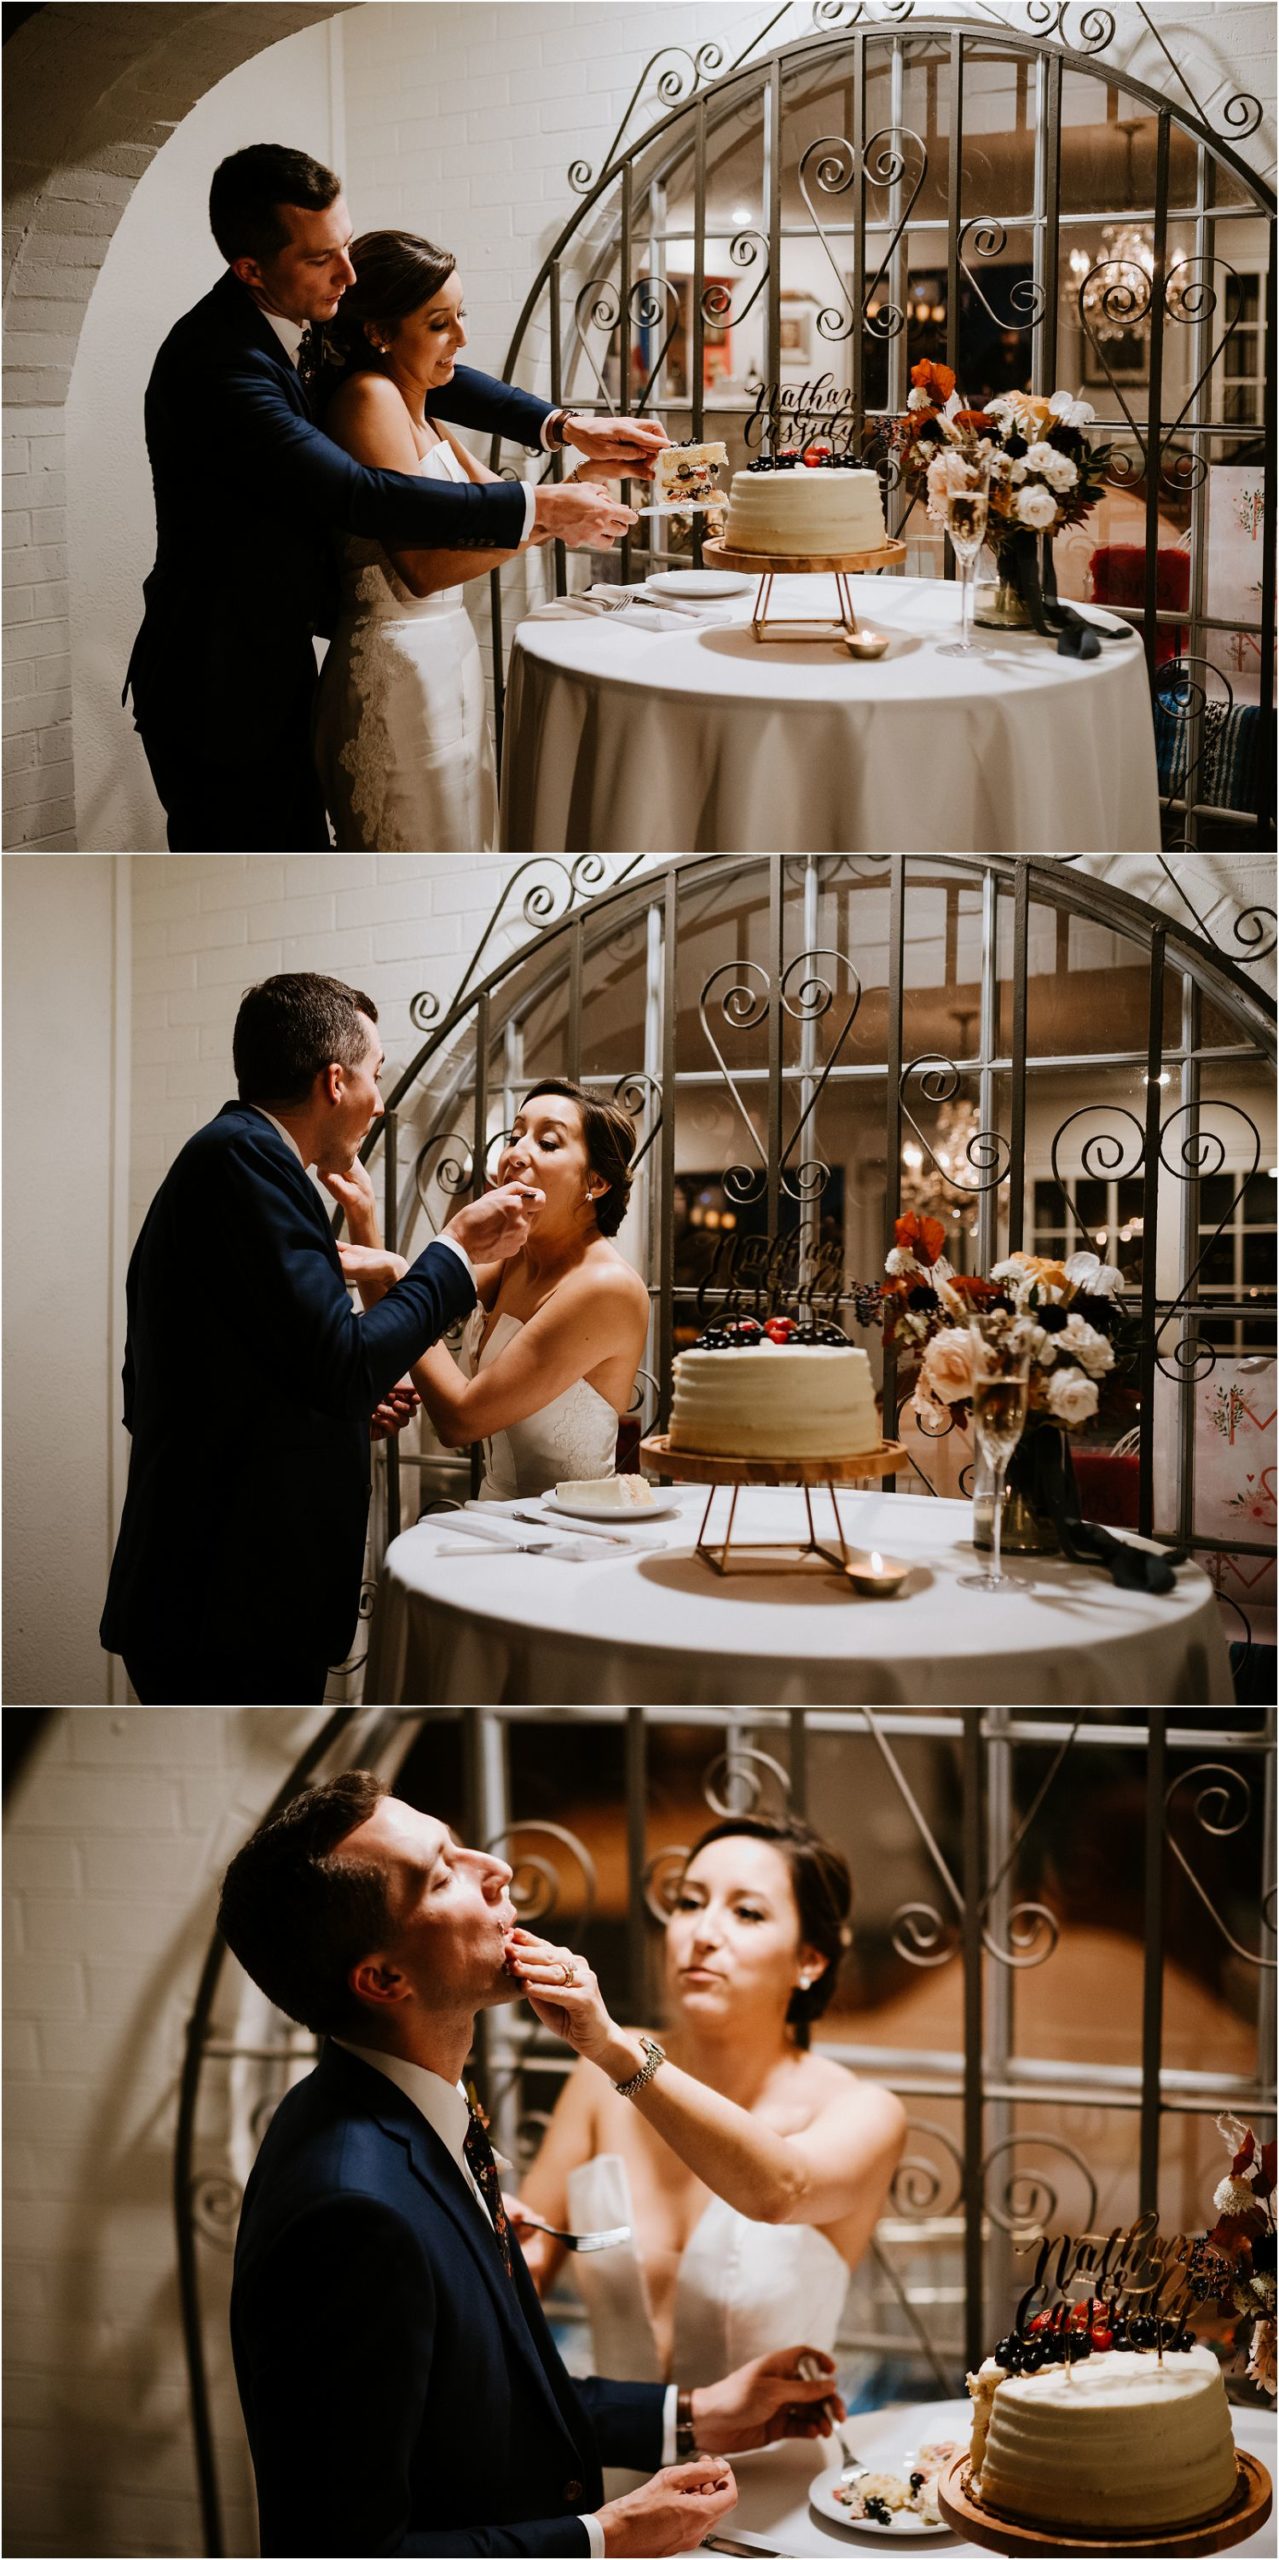 couple cuts cake at wedding